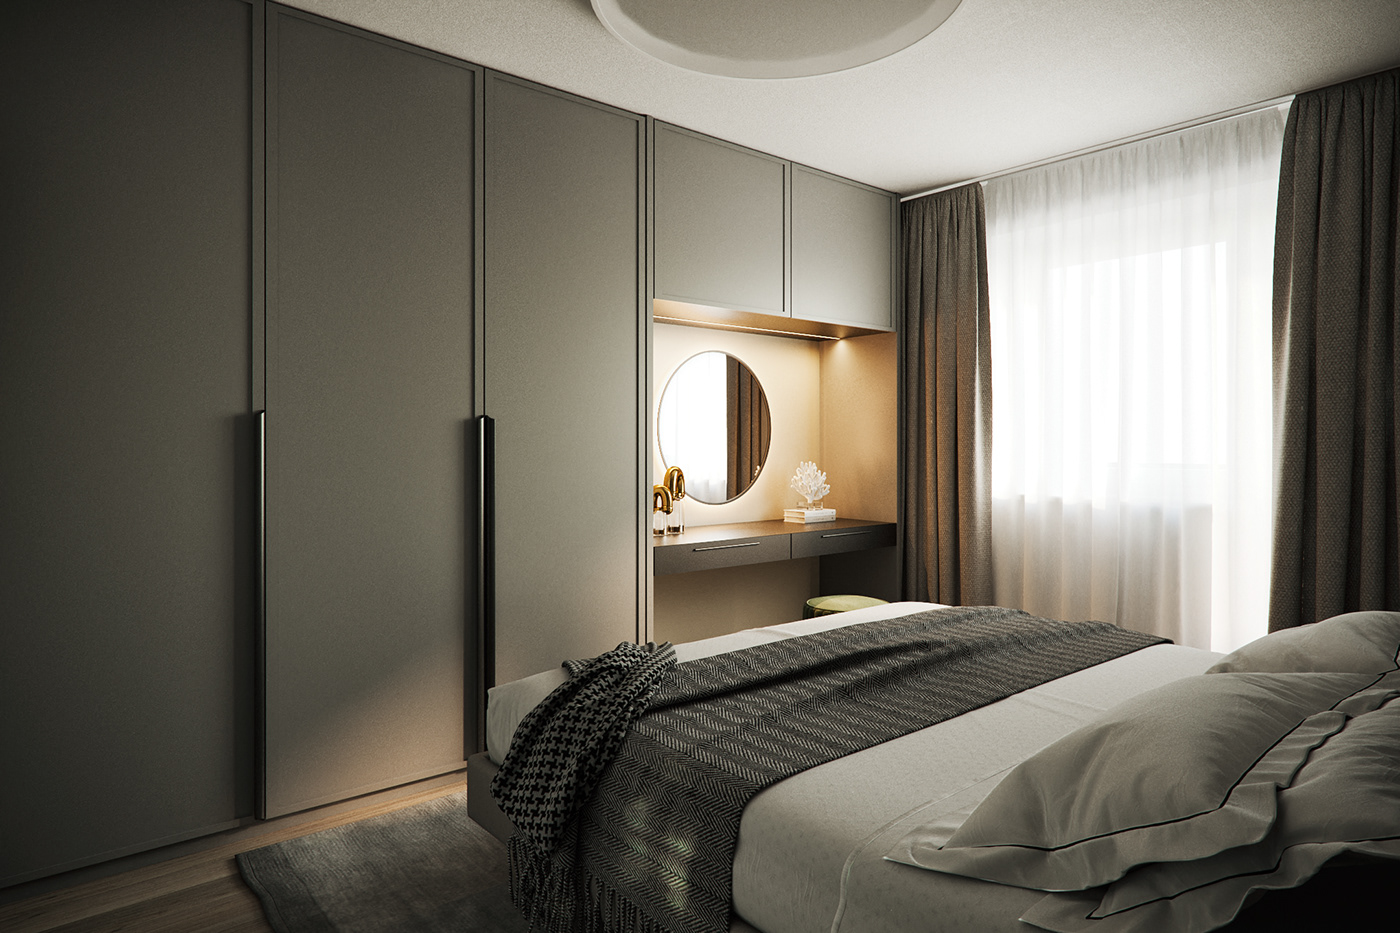 3ds max architecture archviz bedroom CGI corona render  exterior interior design  kitchen visualization